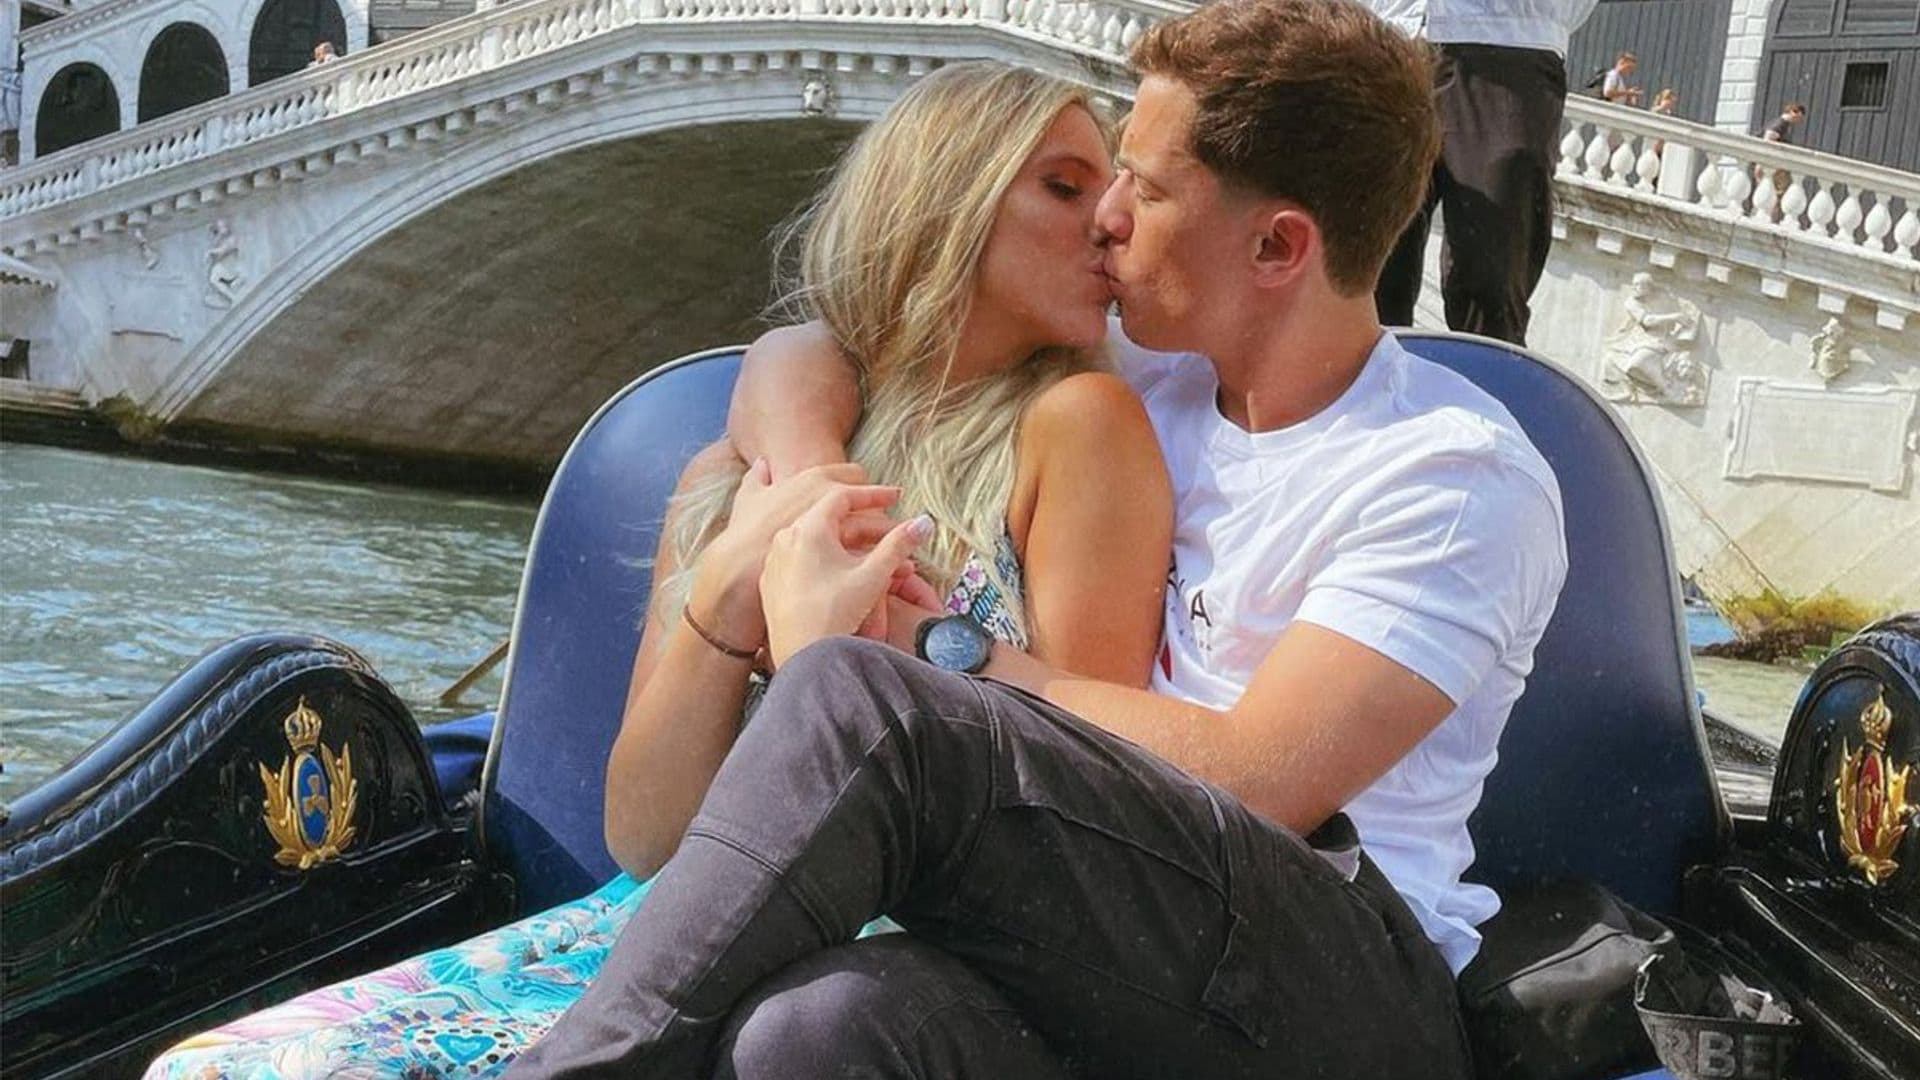 Lele Pons and boyfriend Guaynaa go on a romantic getaway to Venice